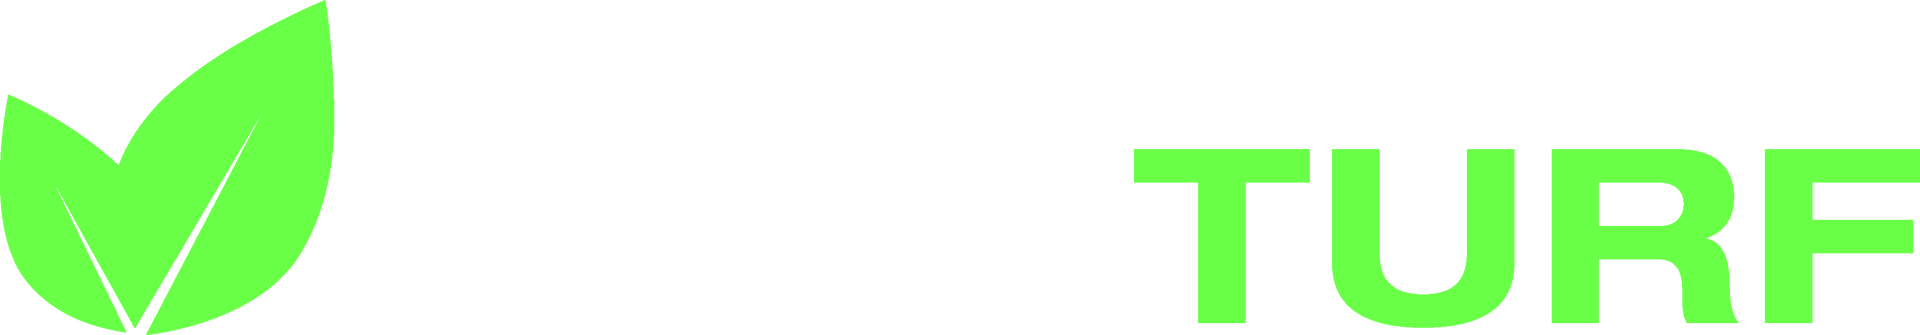 SuperTurf Logo